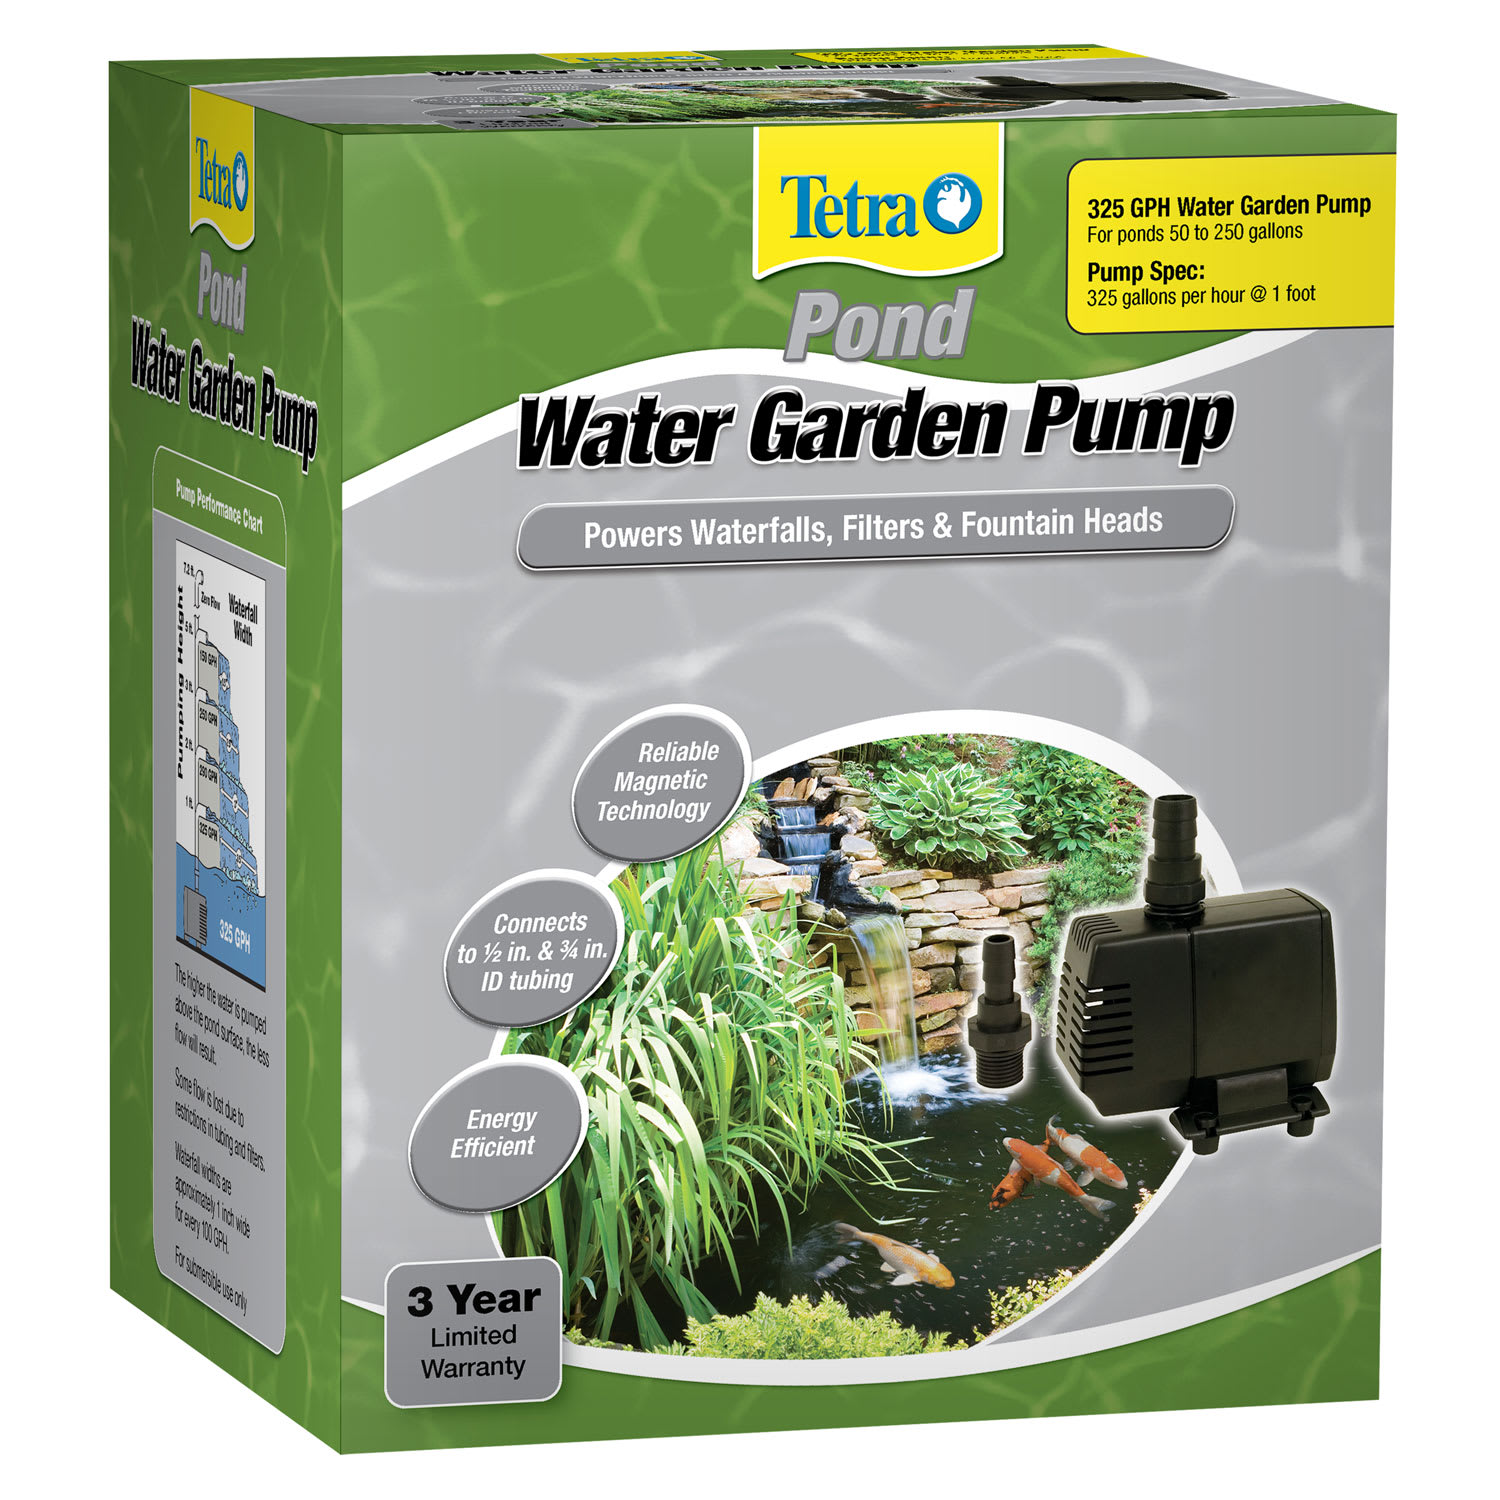 TetraPond Water Garden Pump Powers Waterfalls/Filters/Fountain Heads 